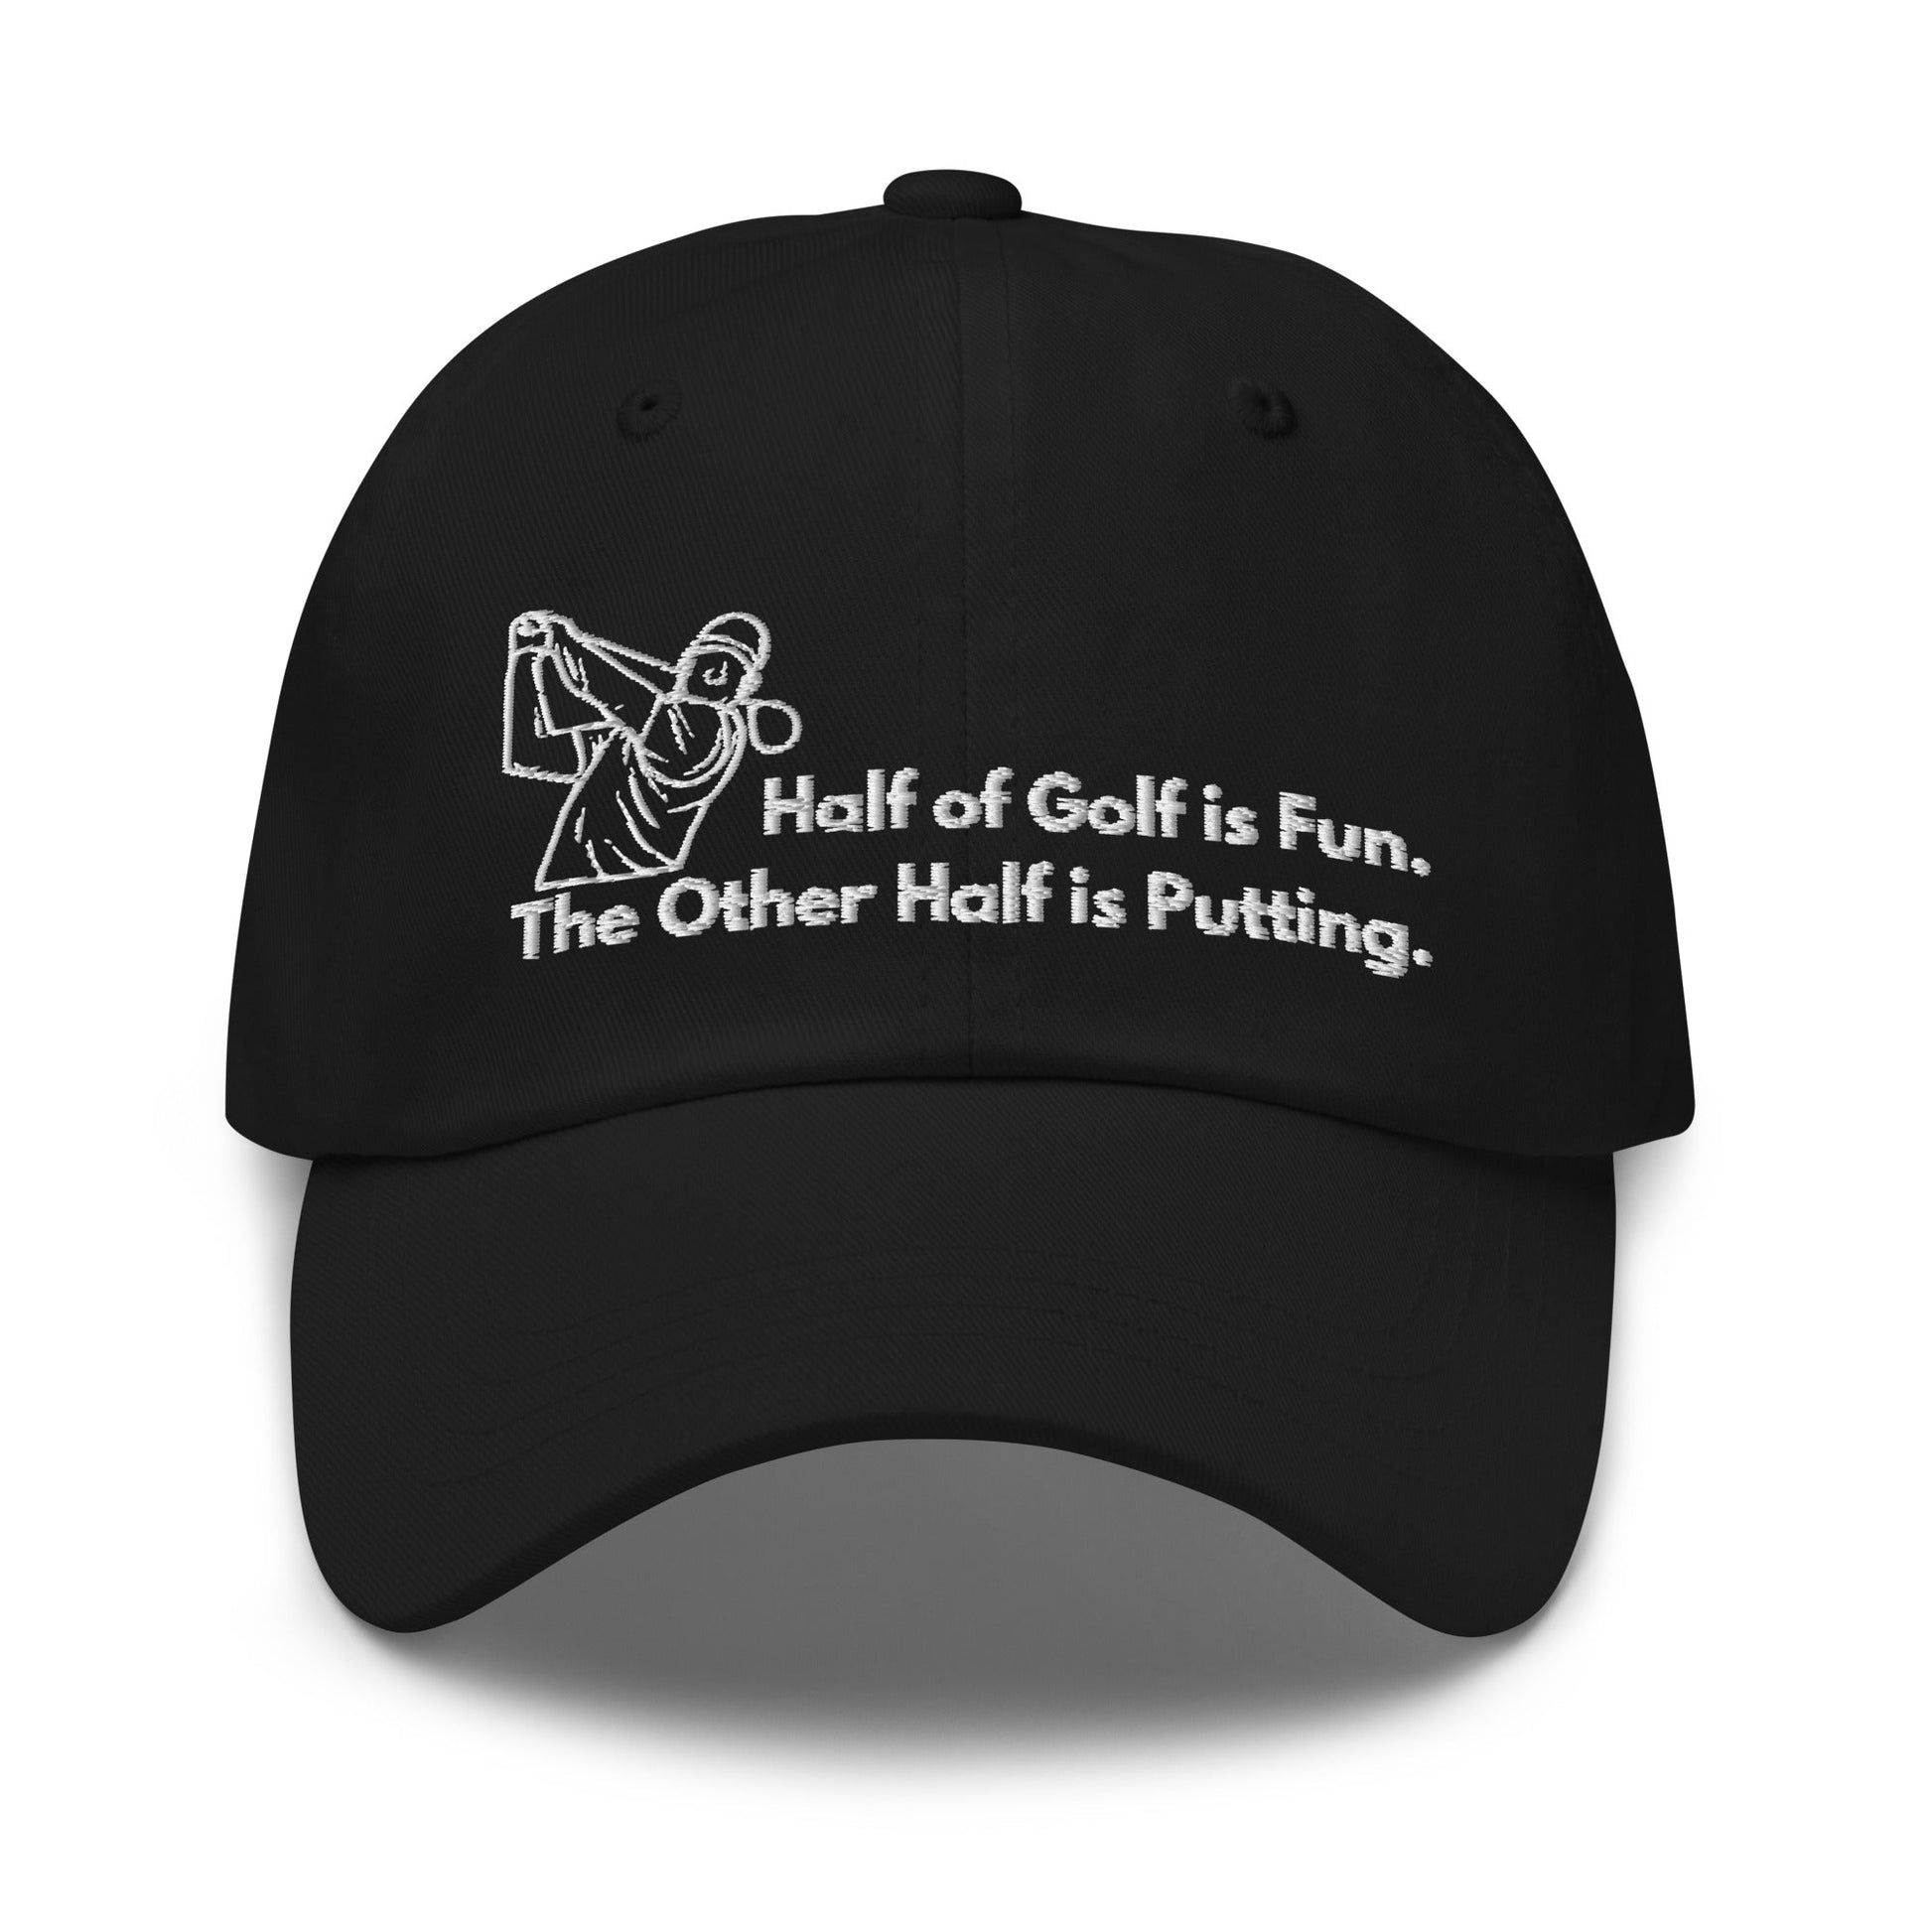 Funny Golfer Gifts  Dad Cap Black Half of Golf is Fun